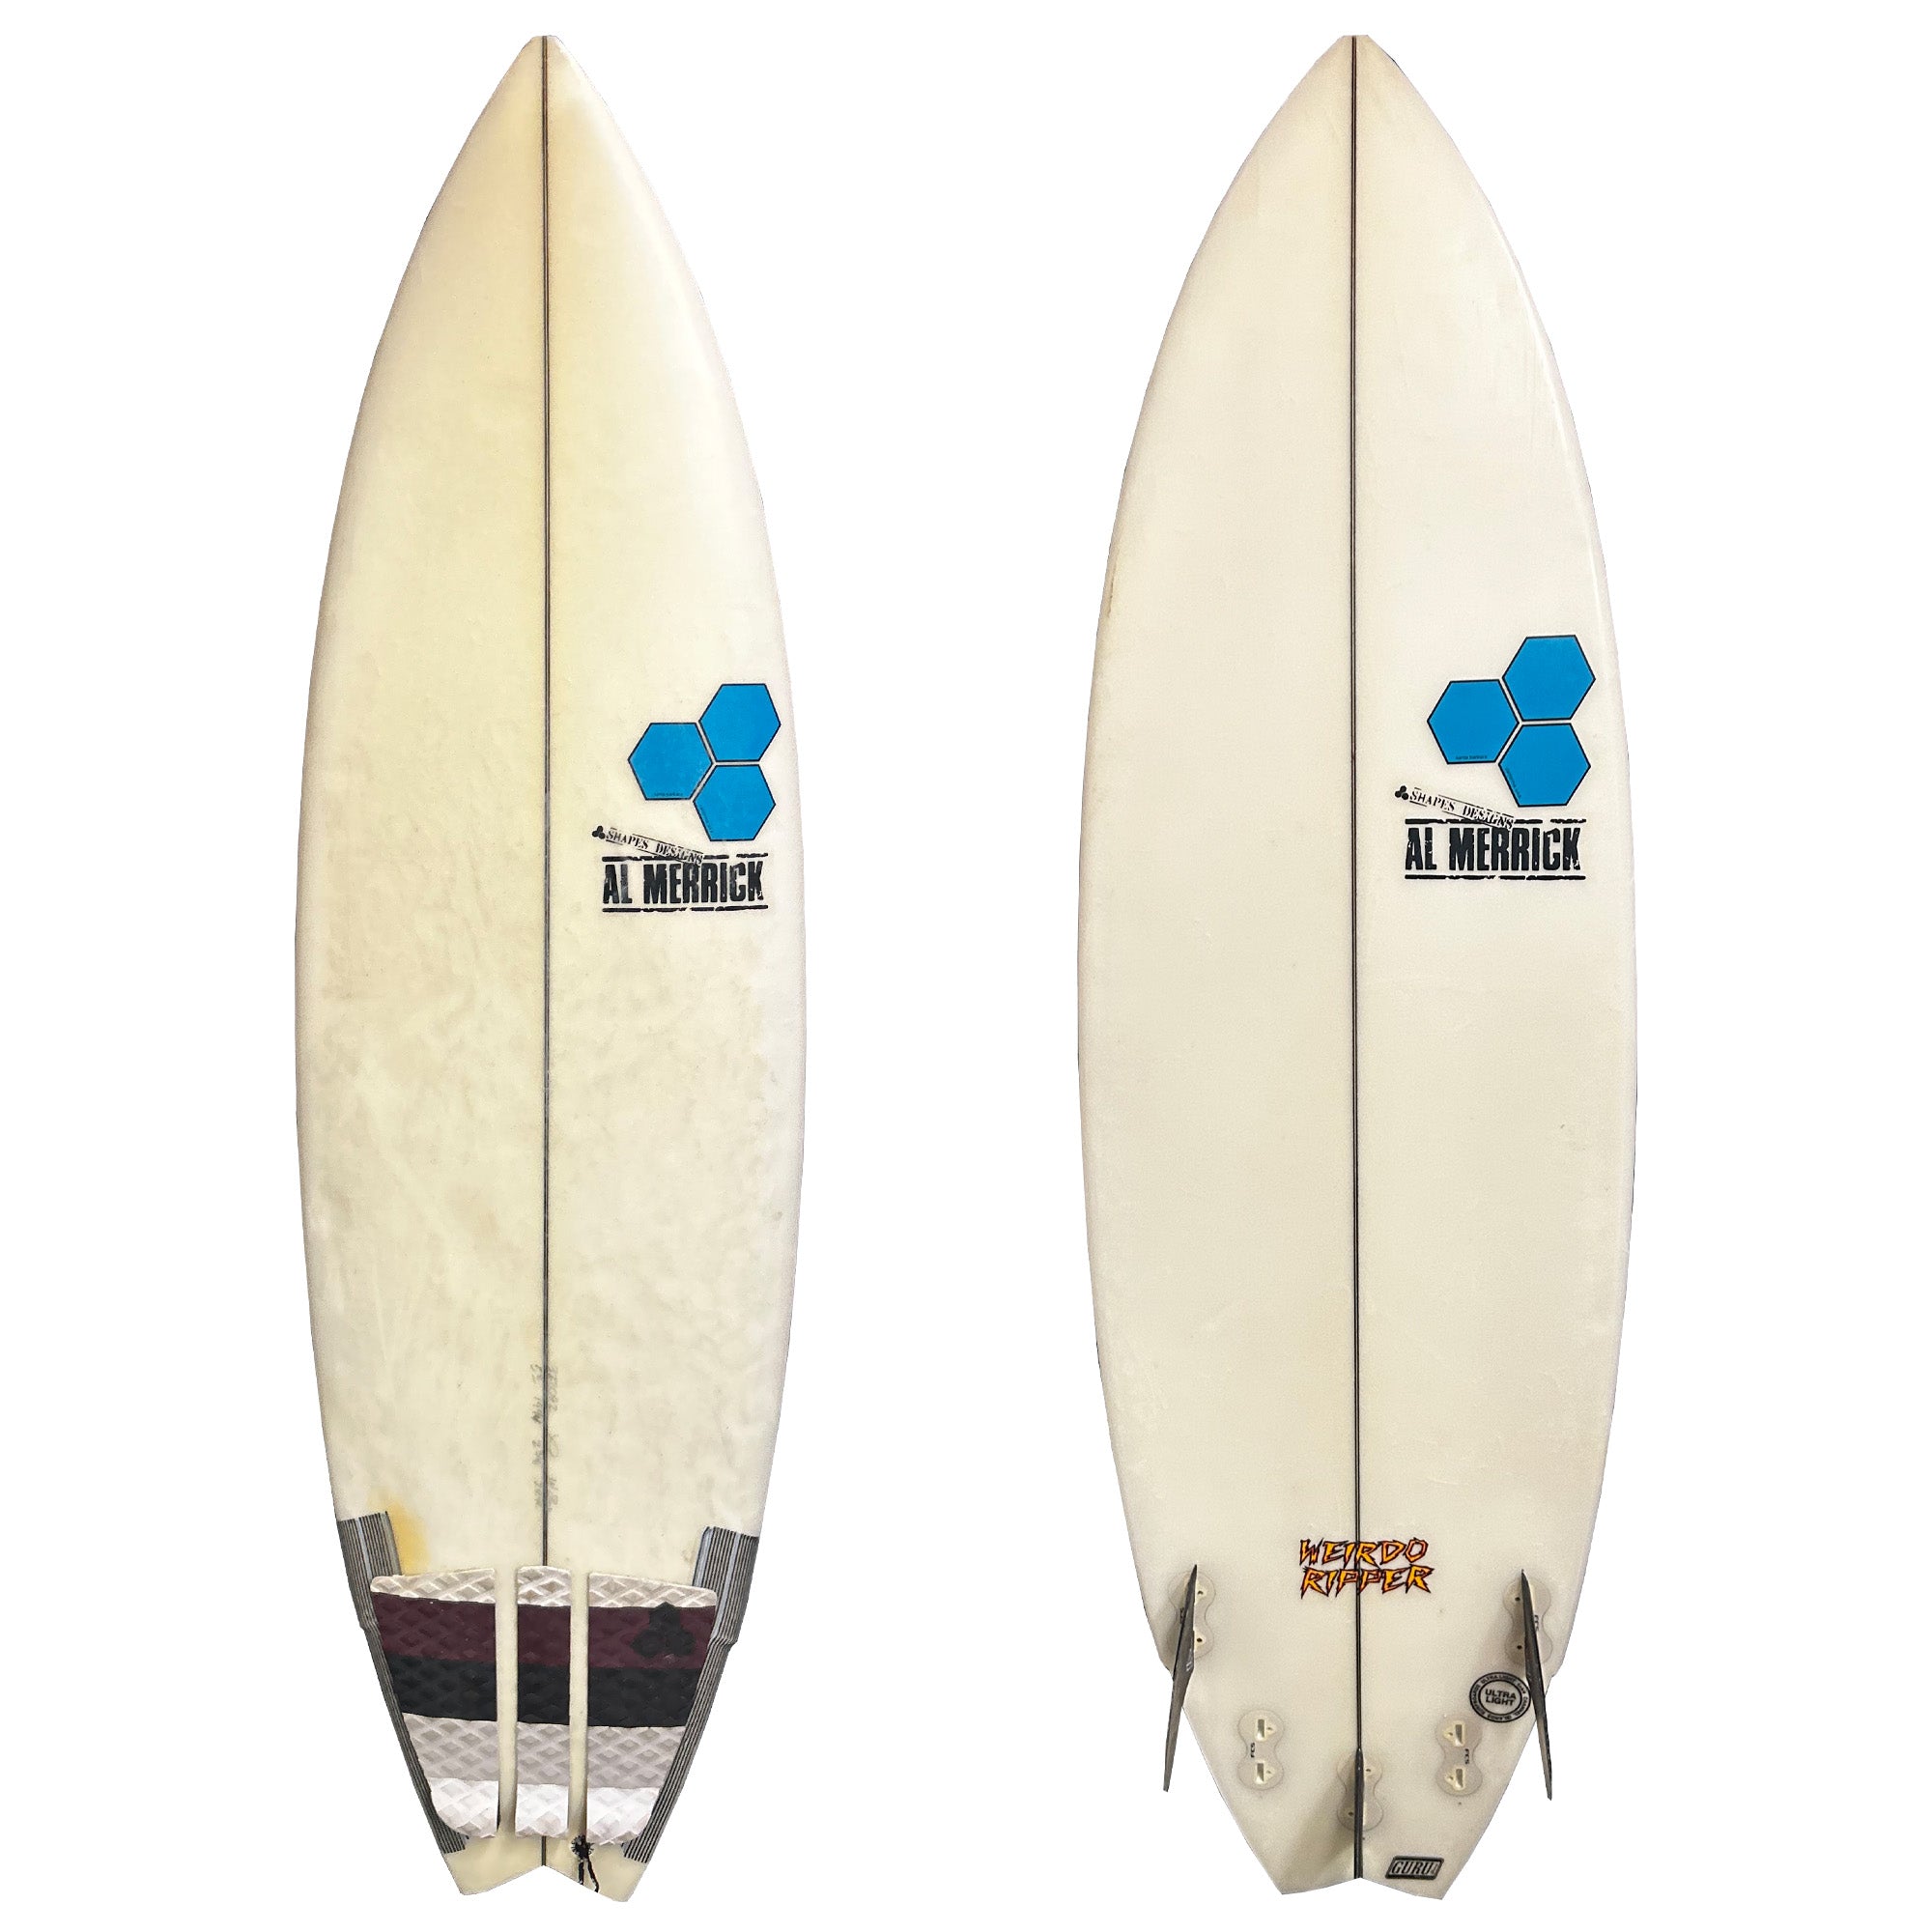 Channel Islands Weirdo Ripper 5'8 Consignment Surfboard